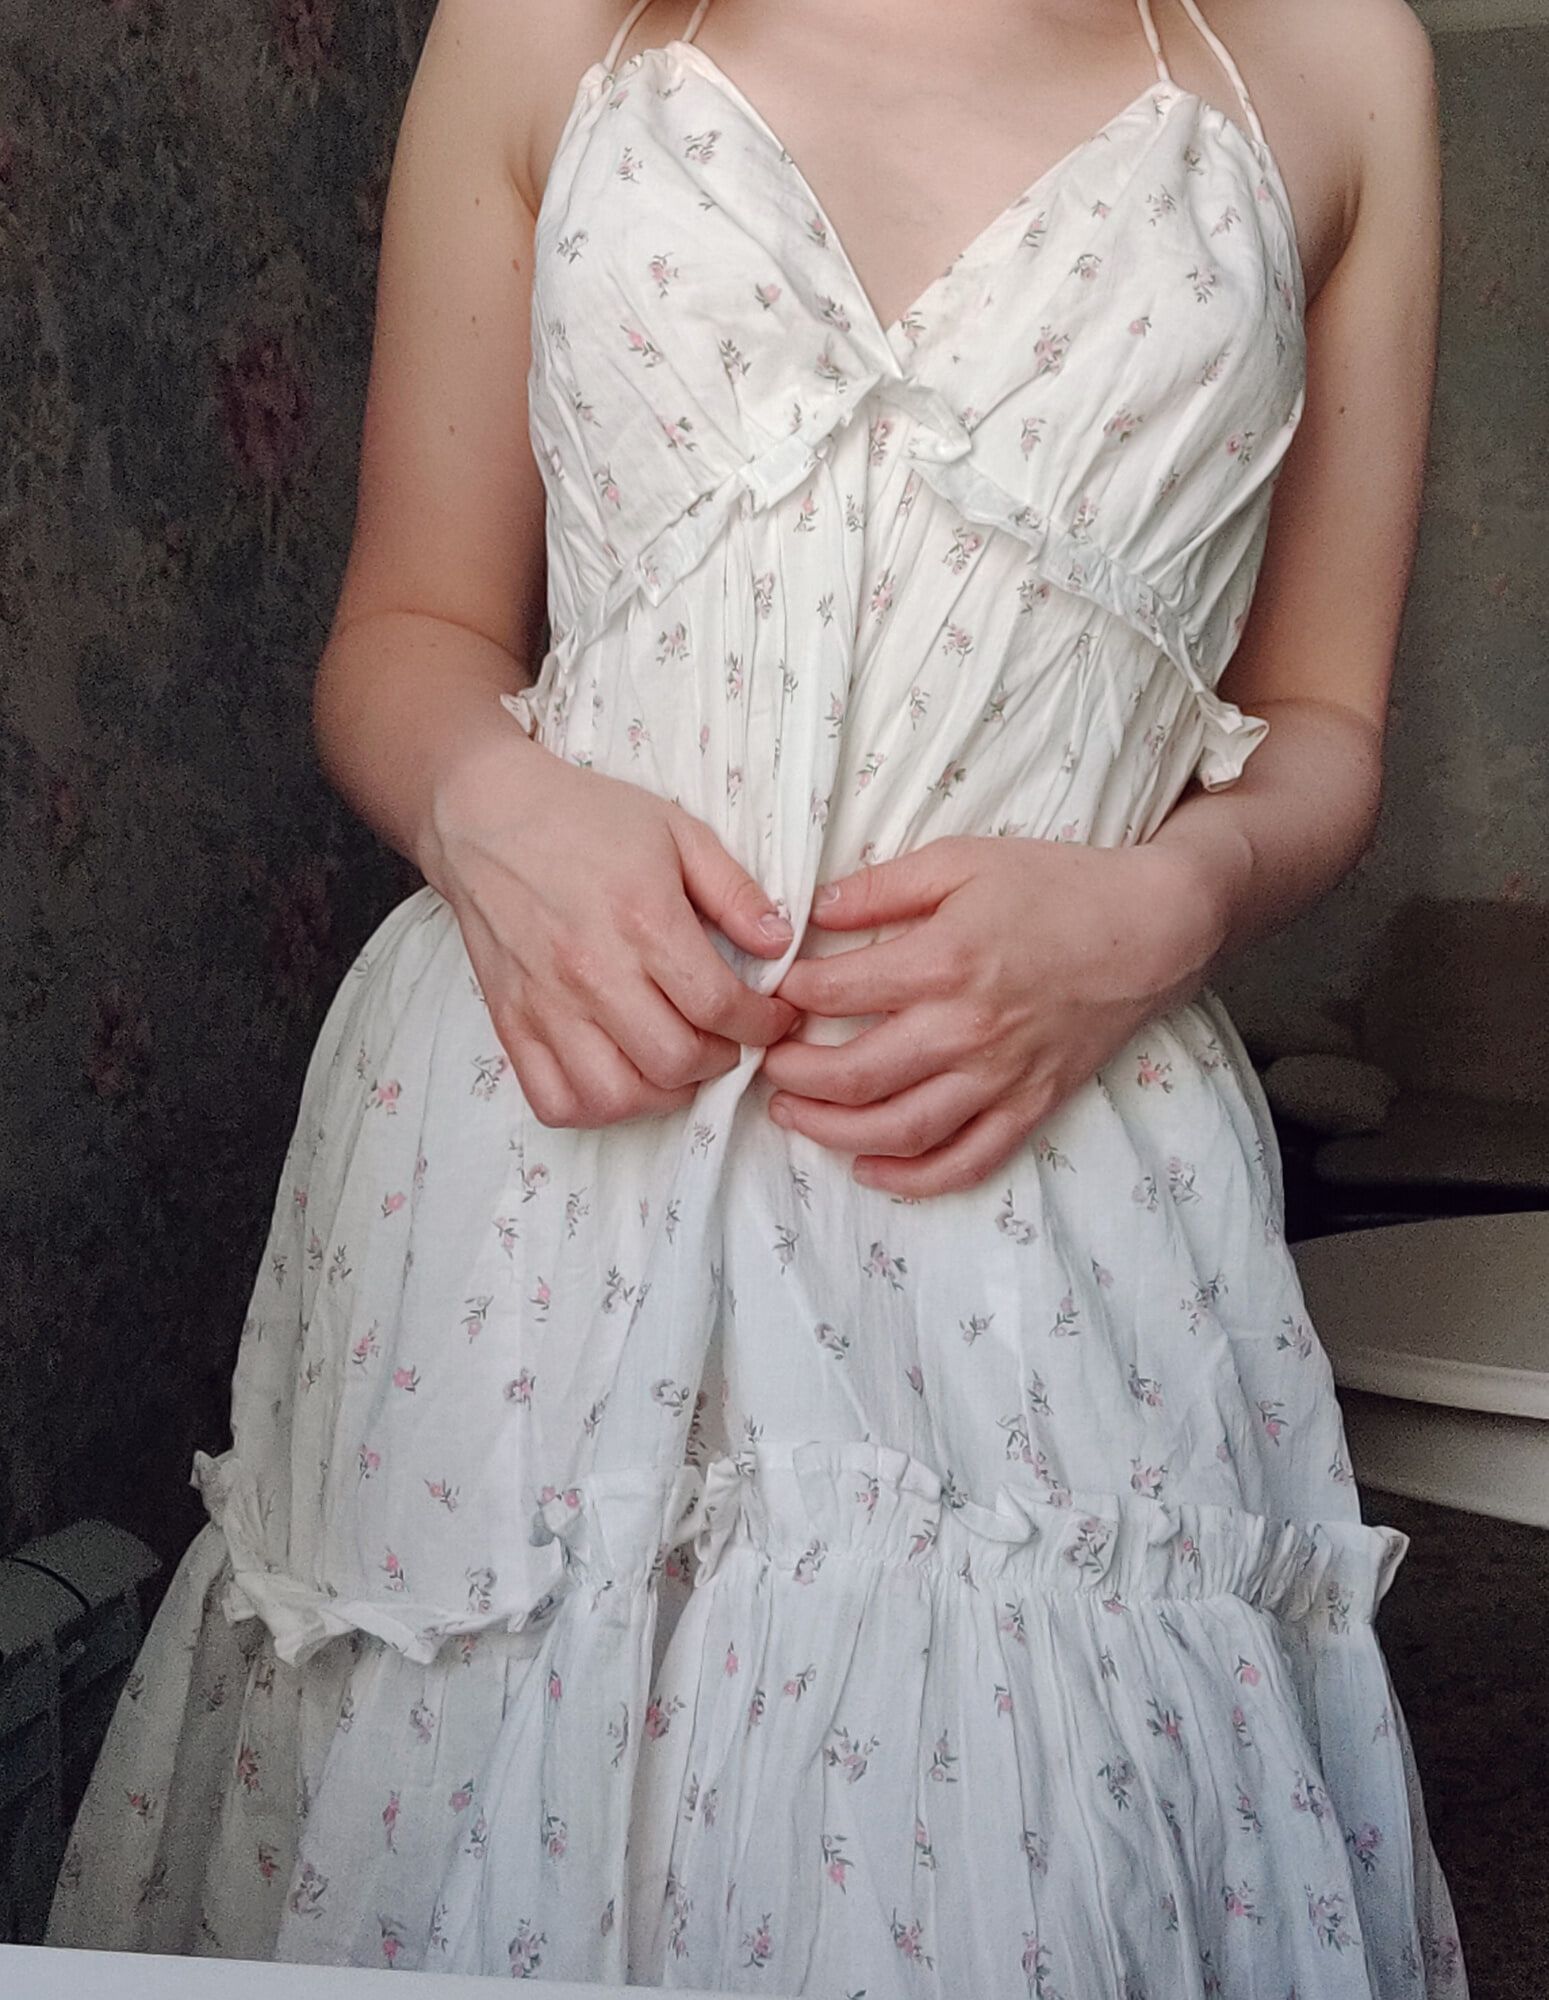 Did u like this dress?